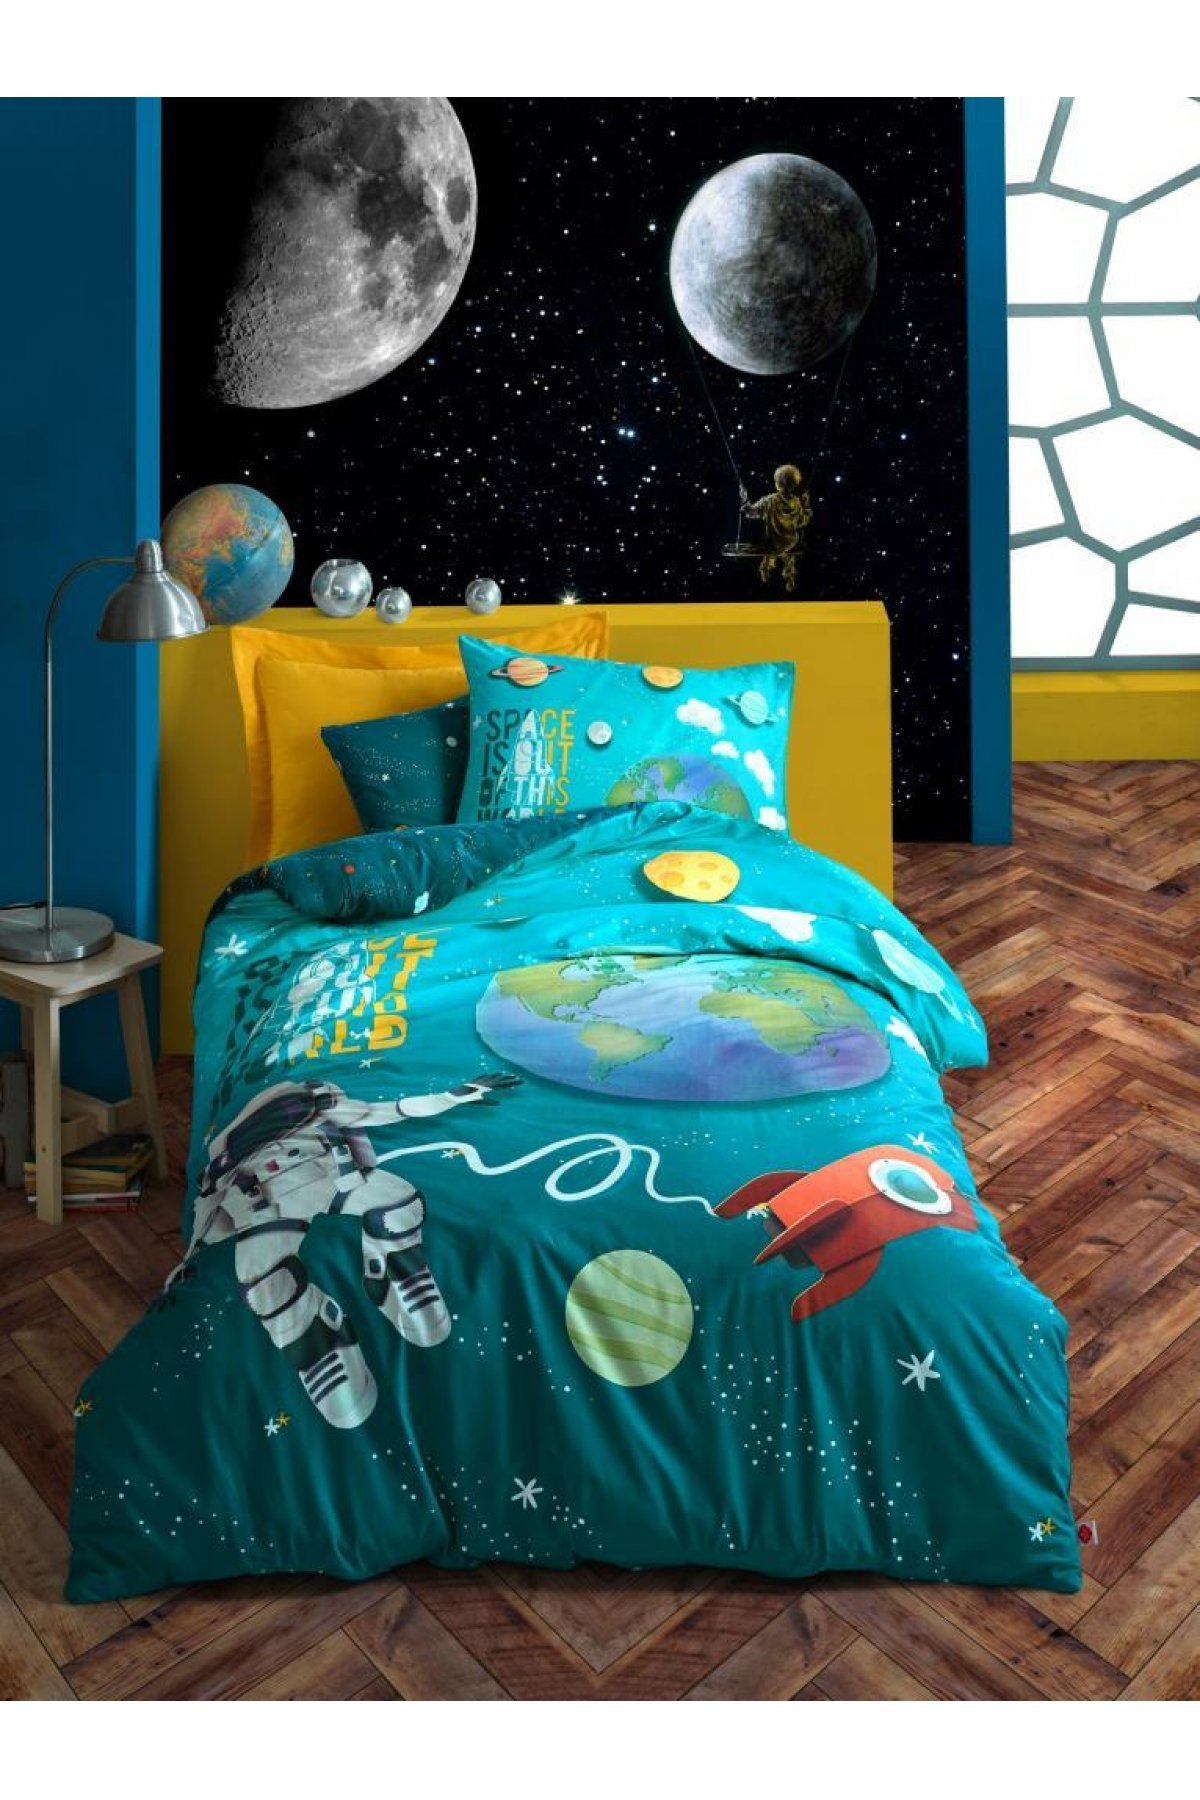 Bedding-Turquoise